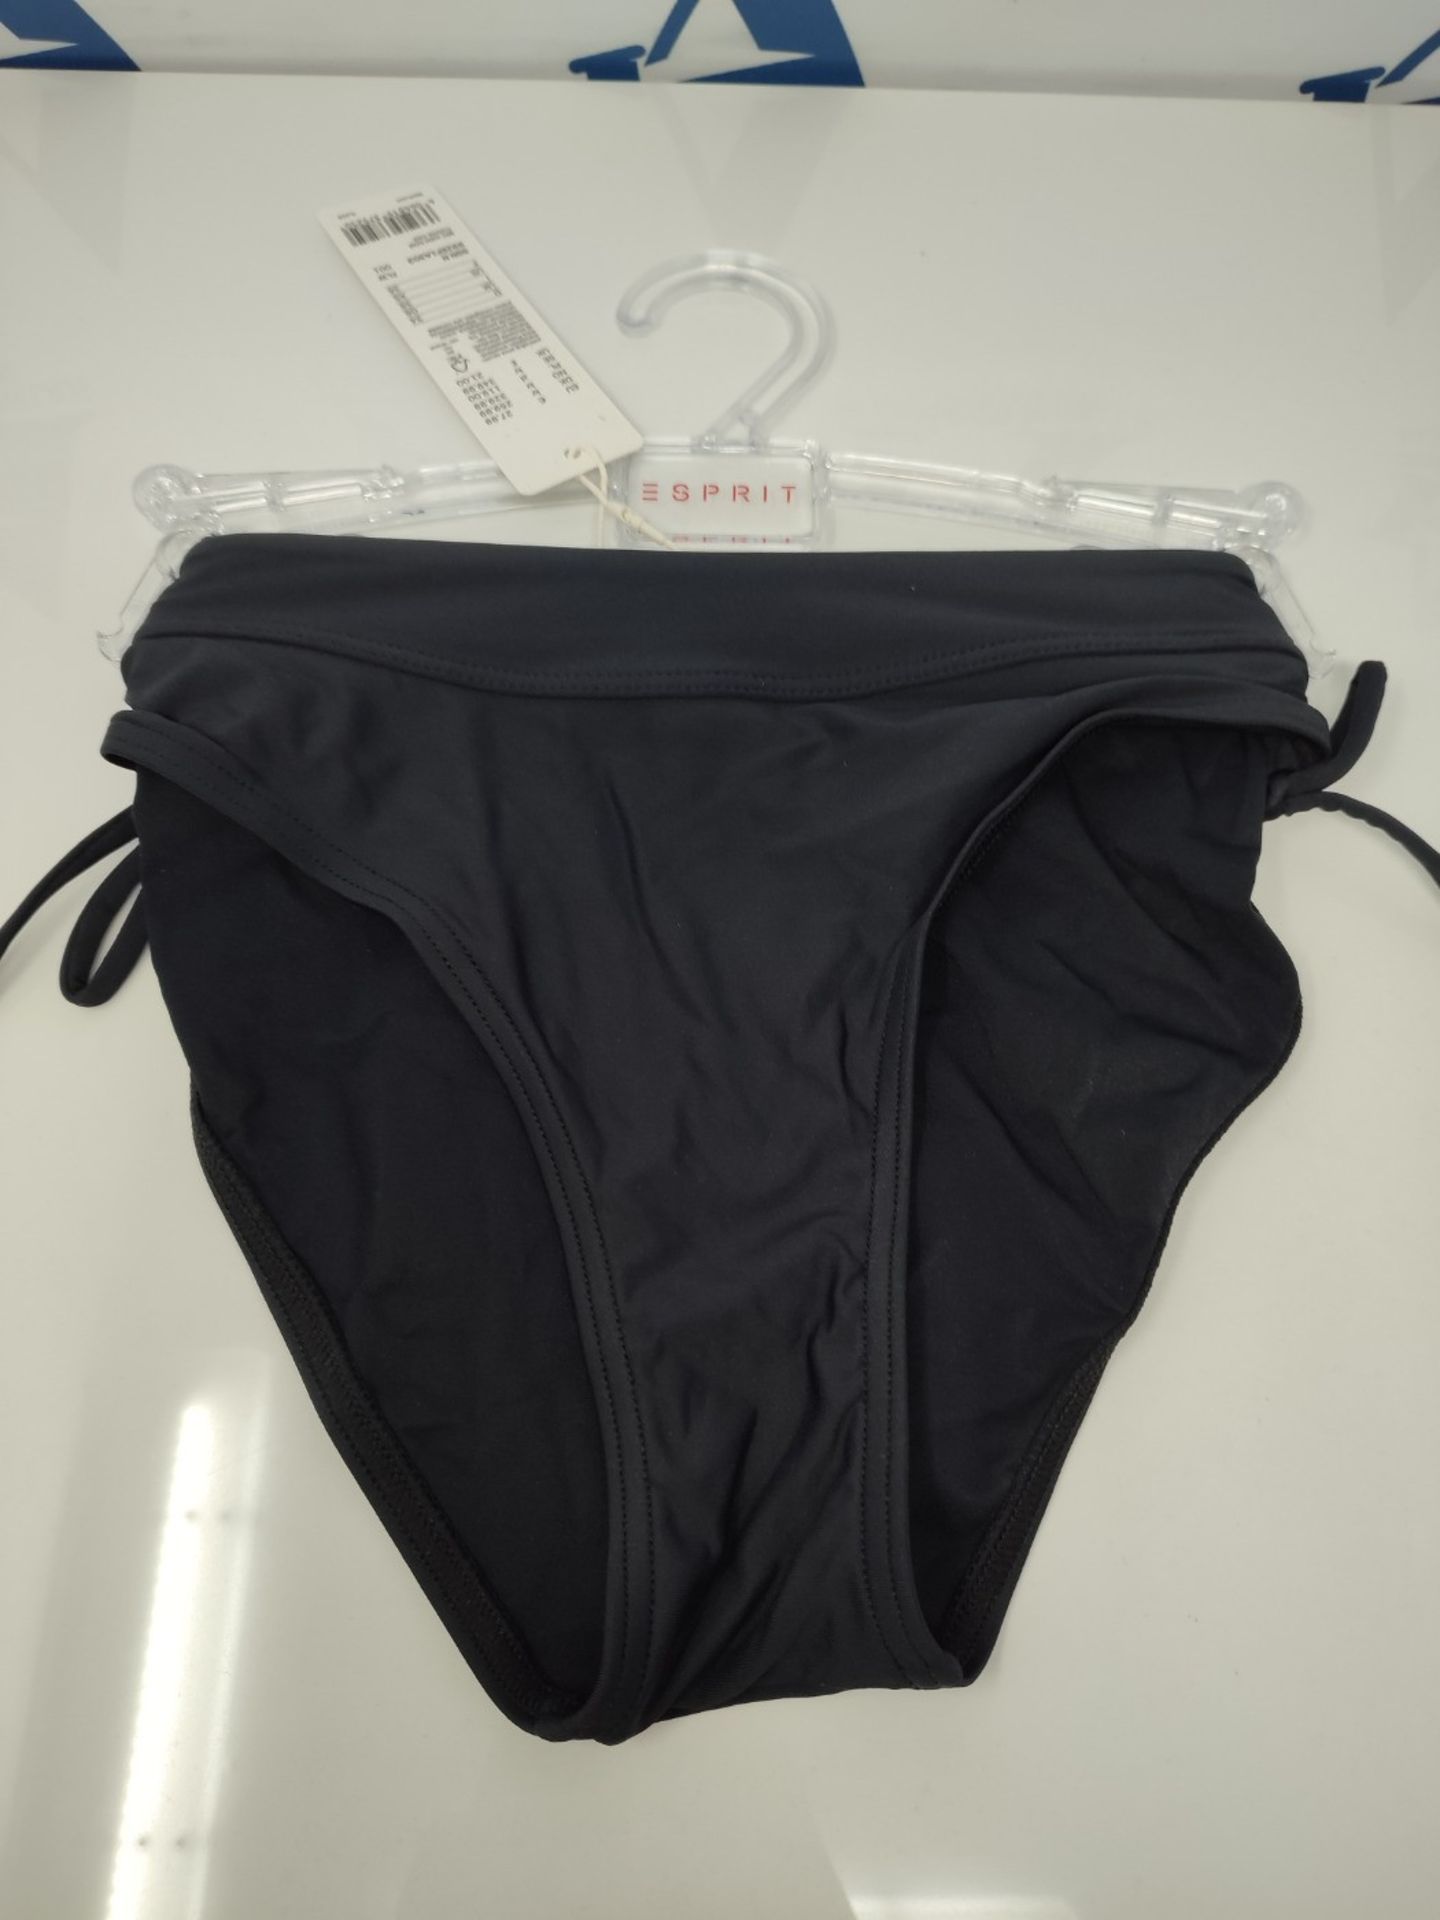 ESPRIT Bodywear Women's TURA Beach AY RCS mid.w.Brief Bikini Bottoms, Black, 34 - Image 2 of 2